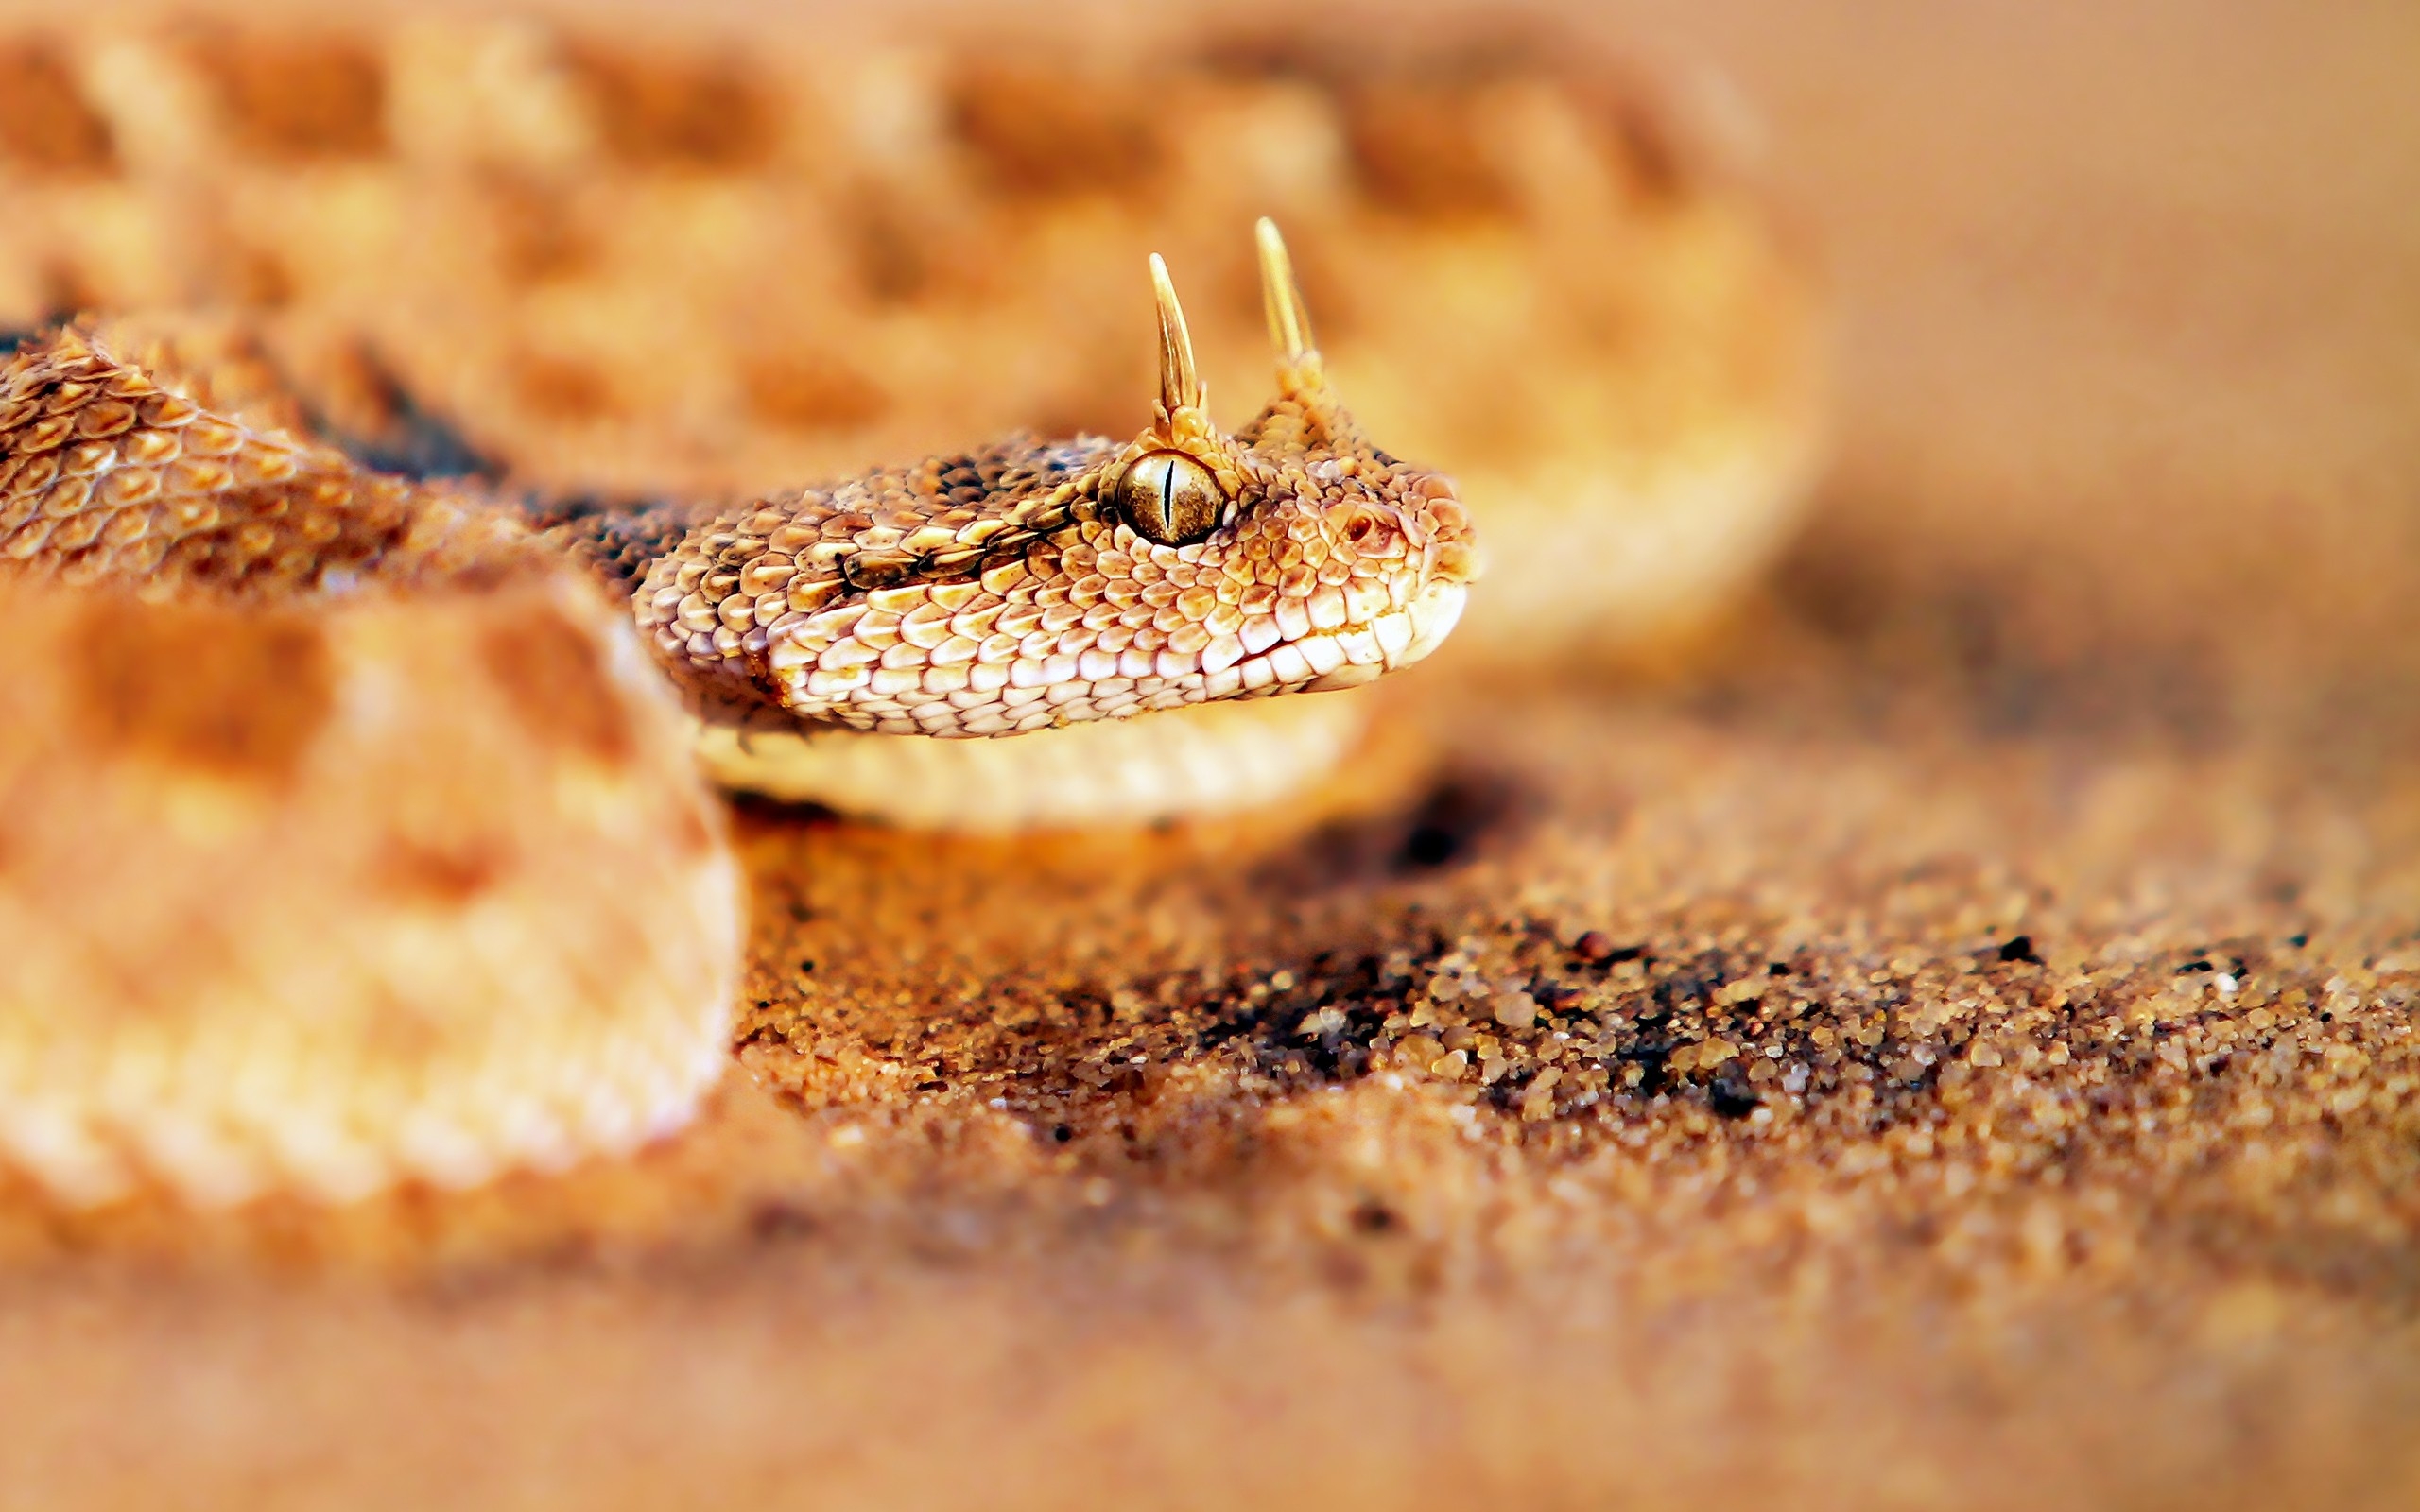 Wallpaper Python snake Animals 5489